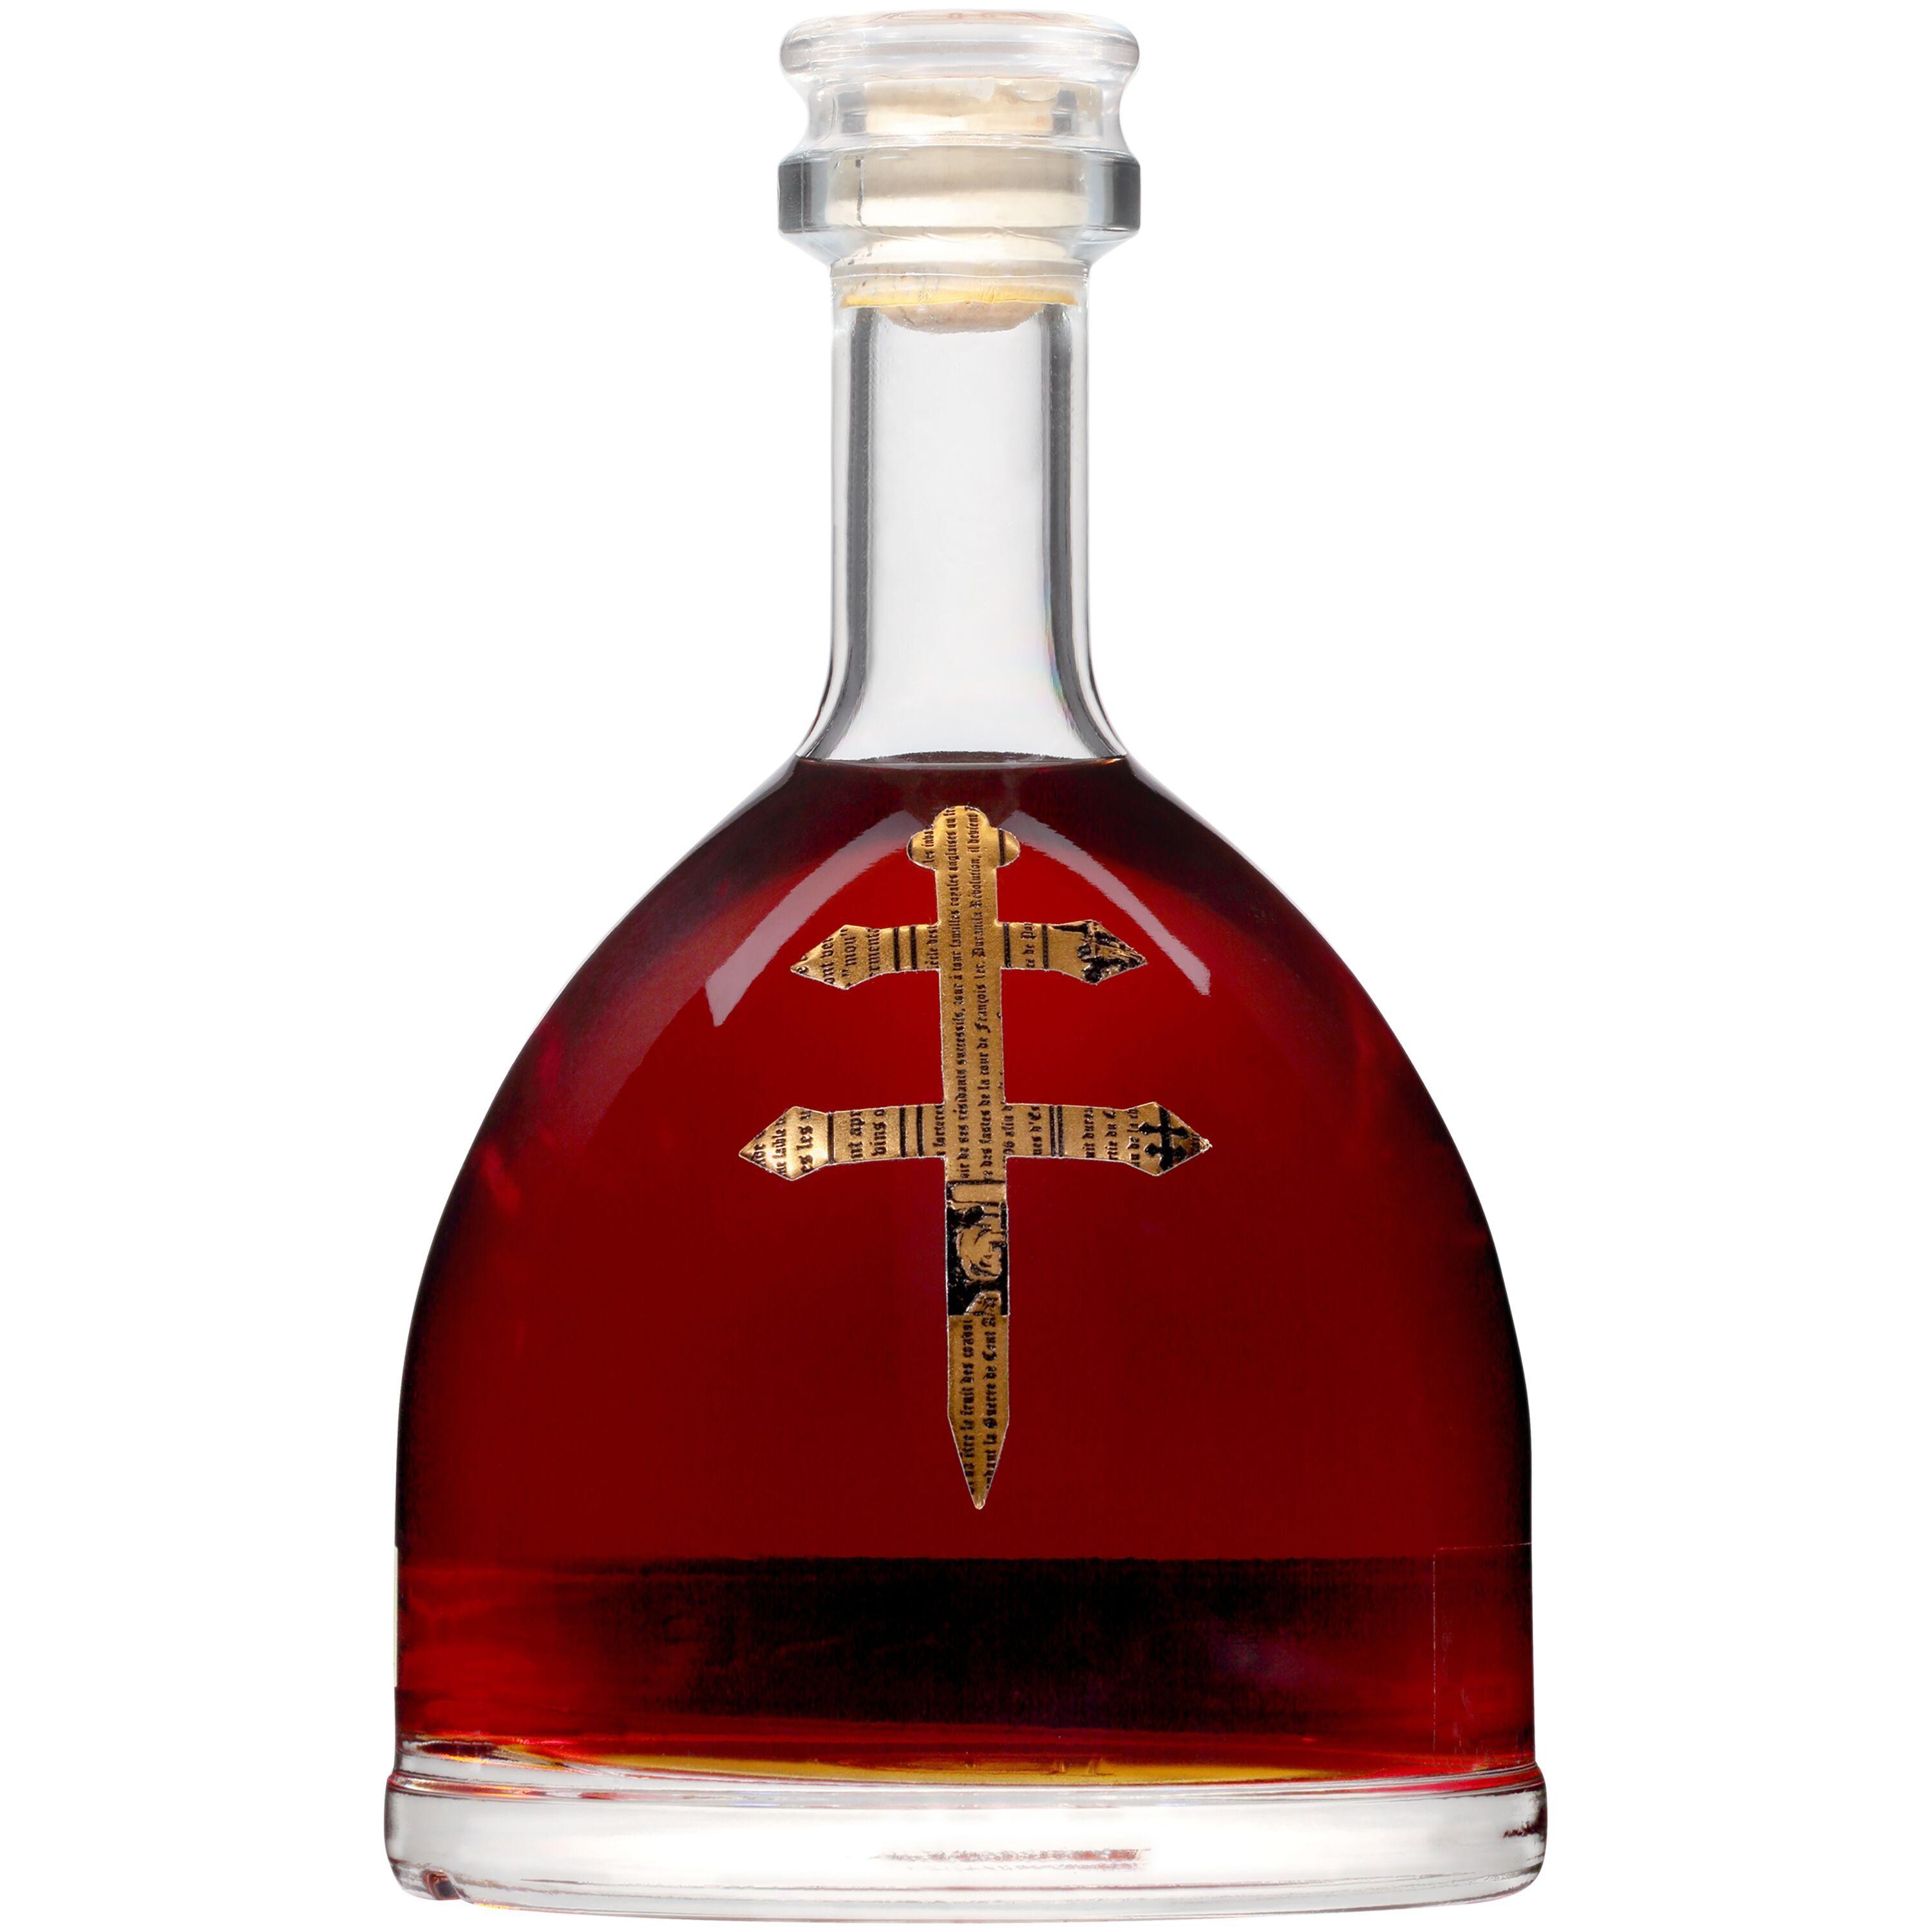 D'usse DUSSE V.S.O.P Cognac Brandy - 750ml Bottle